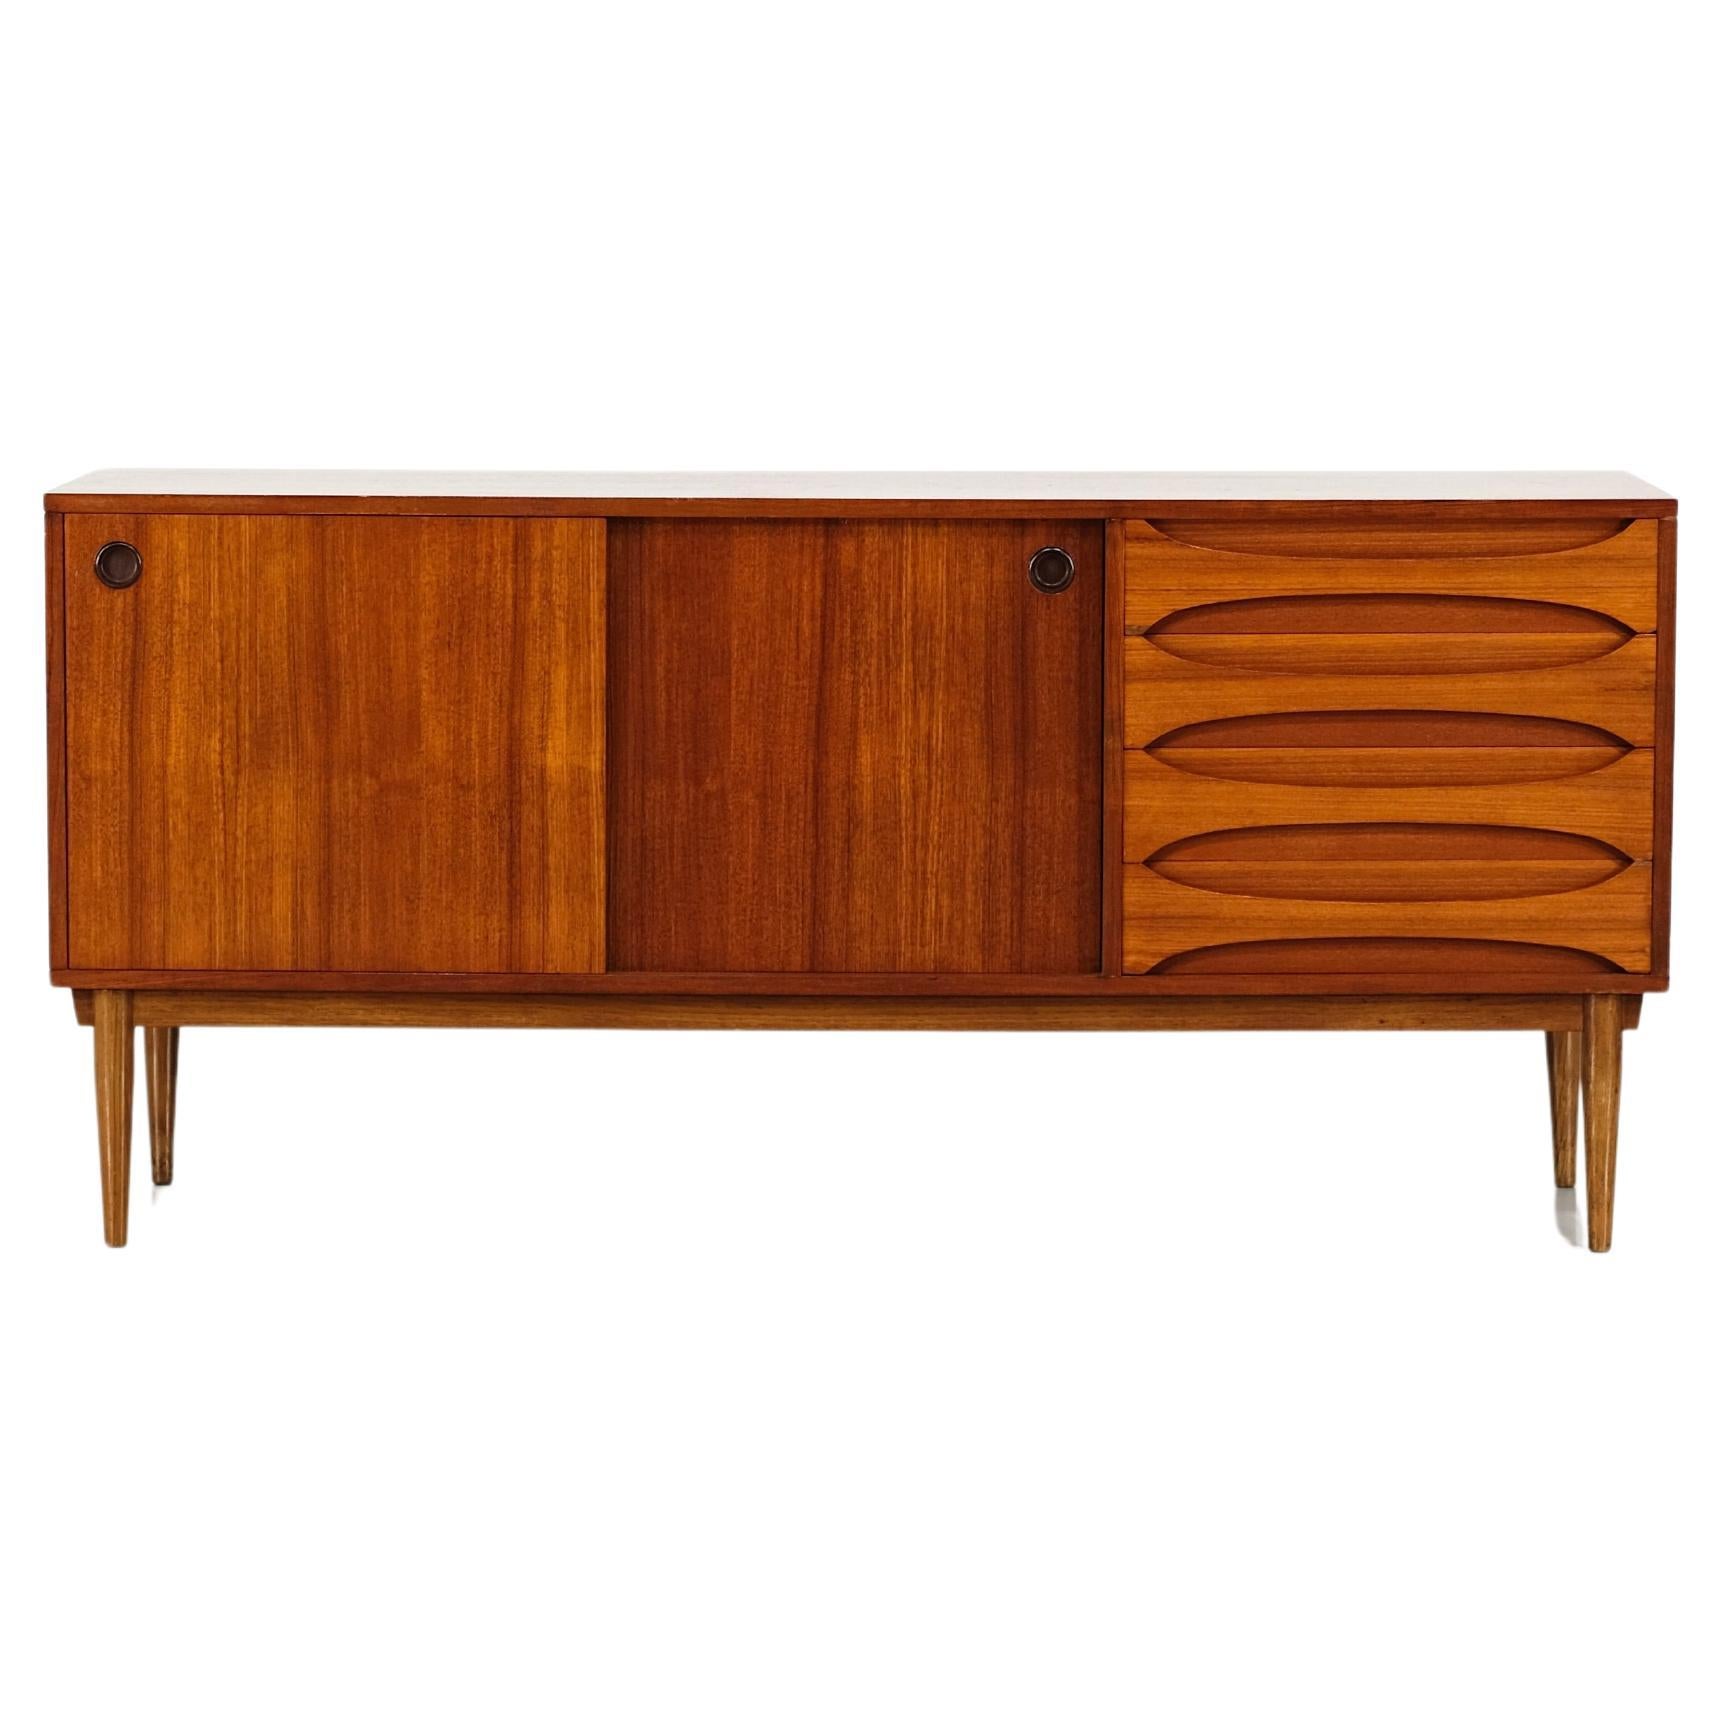  Sideboard in Wood medium size 1960's